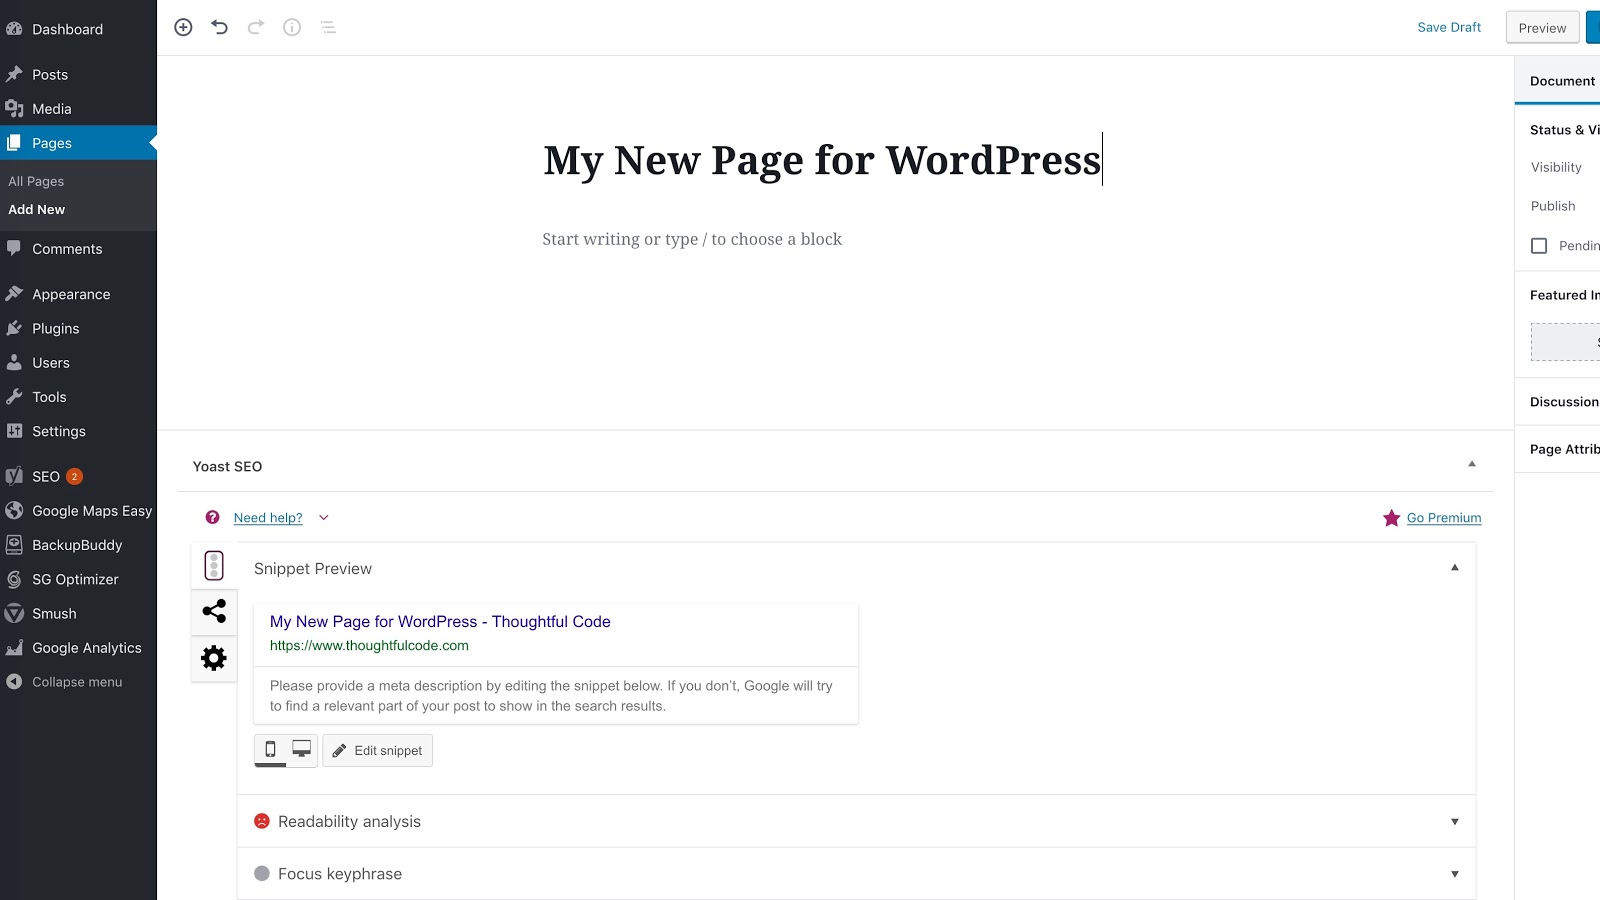 WordPress's website editor interface in use